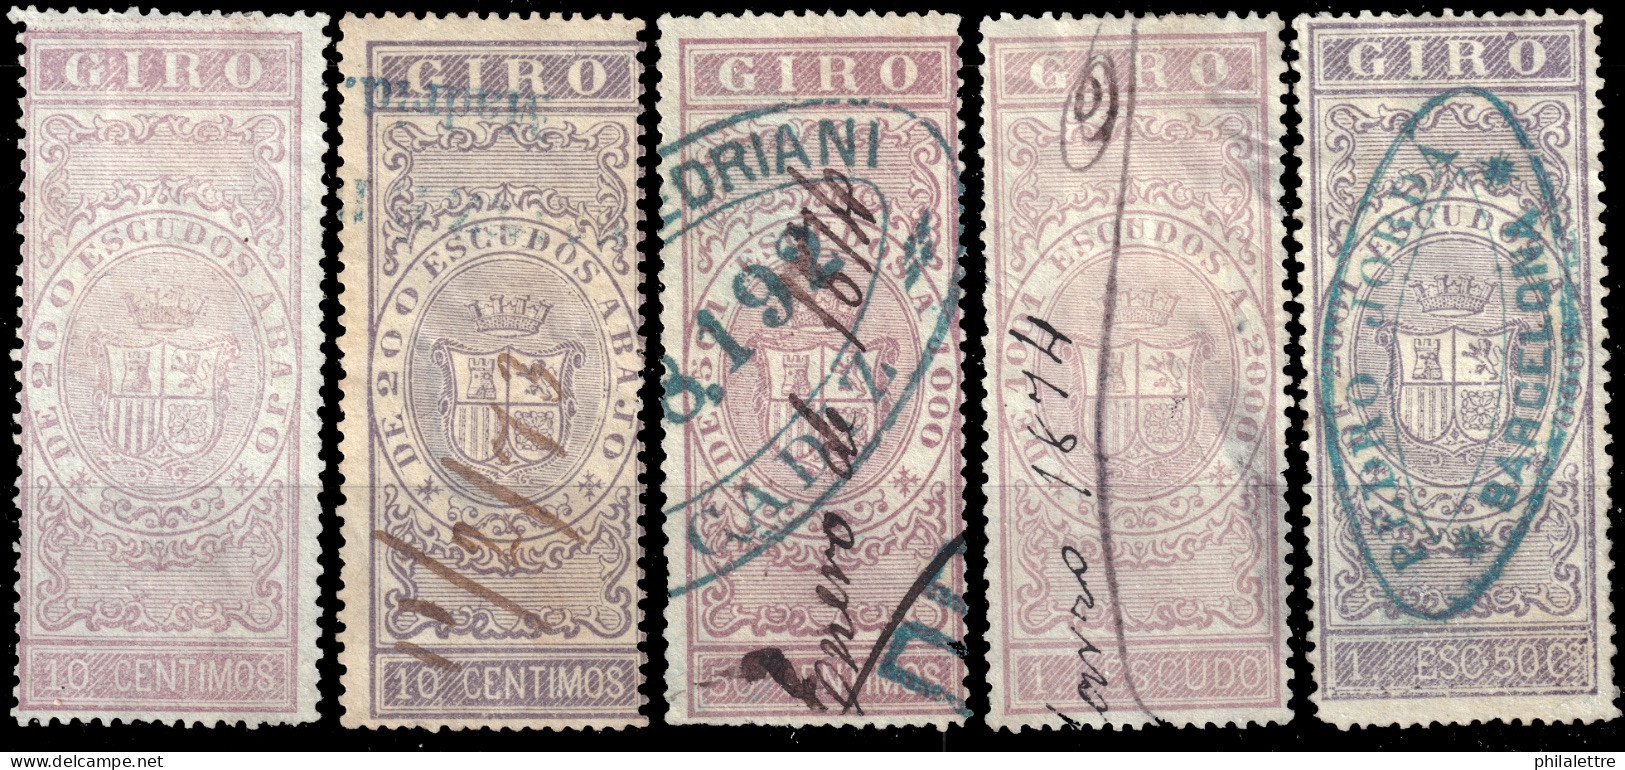 ESPAGNE / ESPANA / SPAIN - 1870 - SELLOS PARA GIRO 10c Sin Goma, 10c, 50c, 1Esc. & 1,50Esc.uso Fiscal Ed.43, 43a, 44/46 - Steuermarken